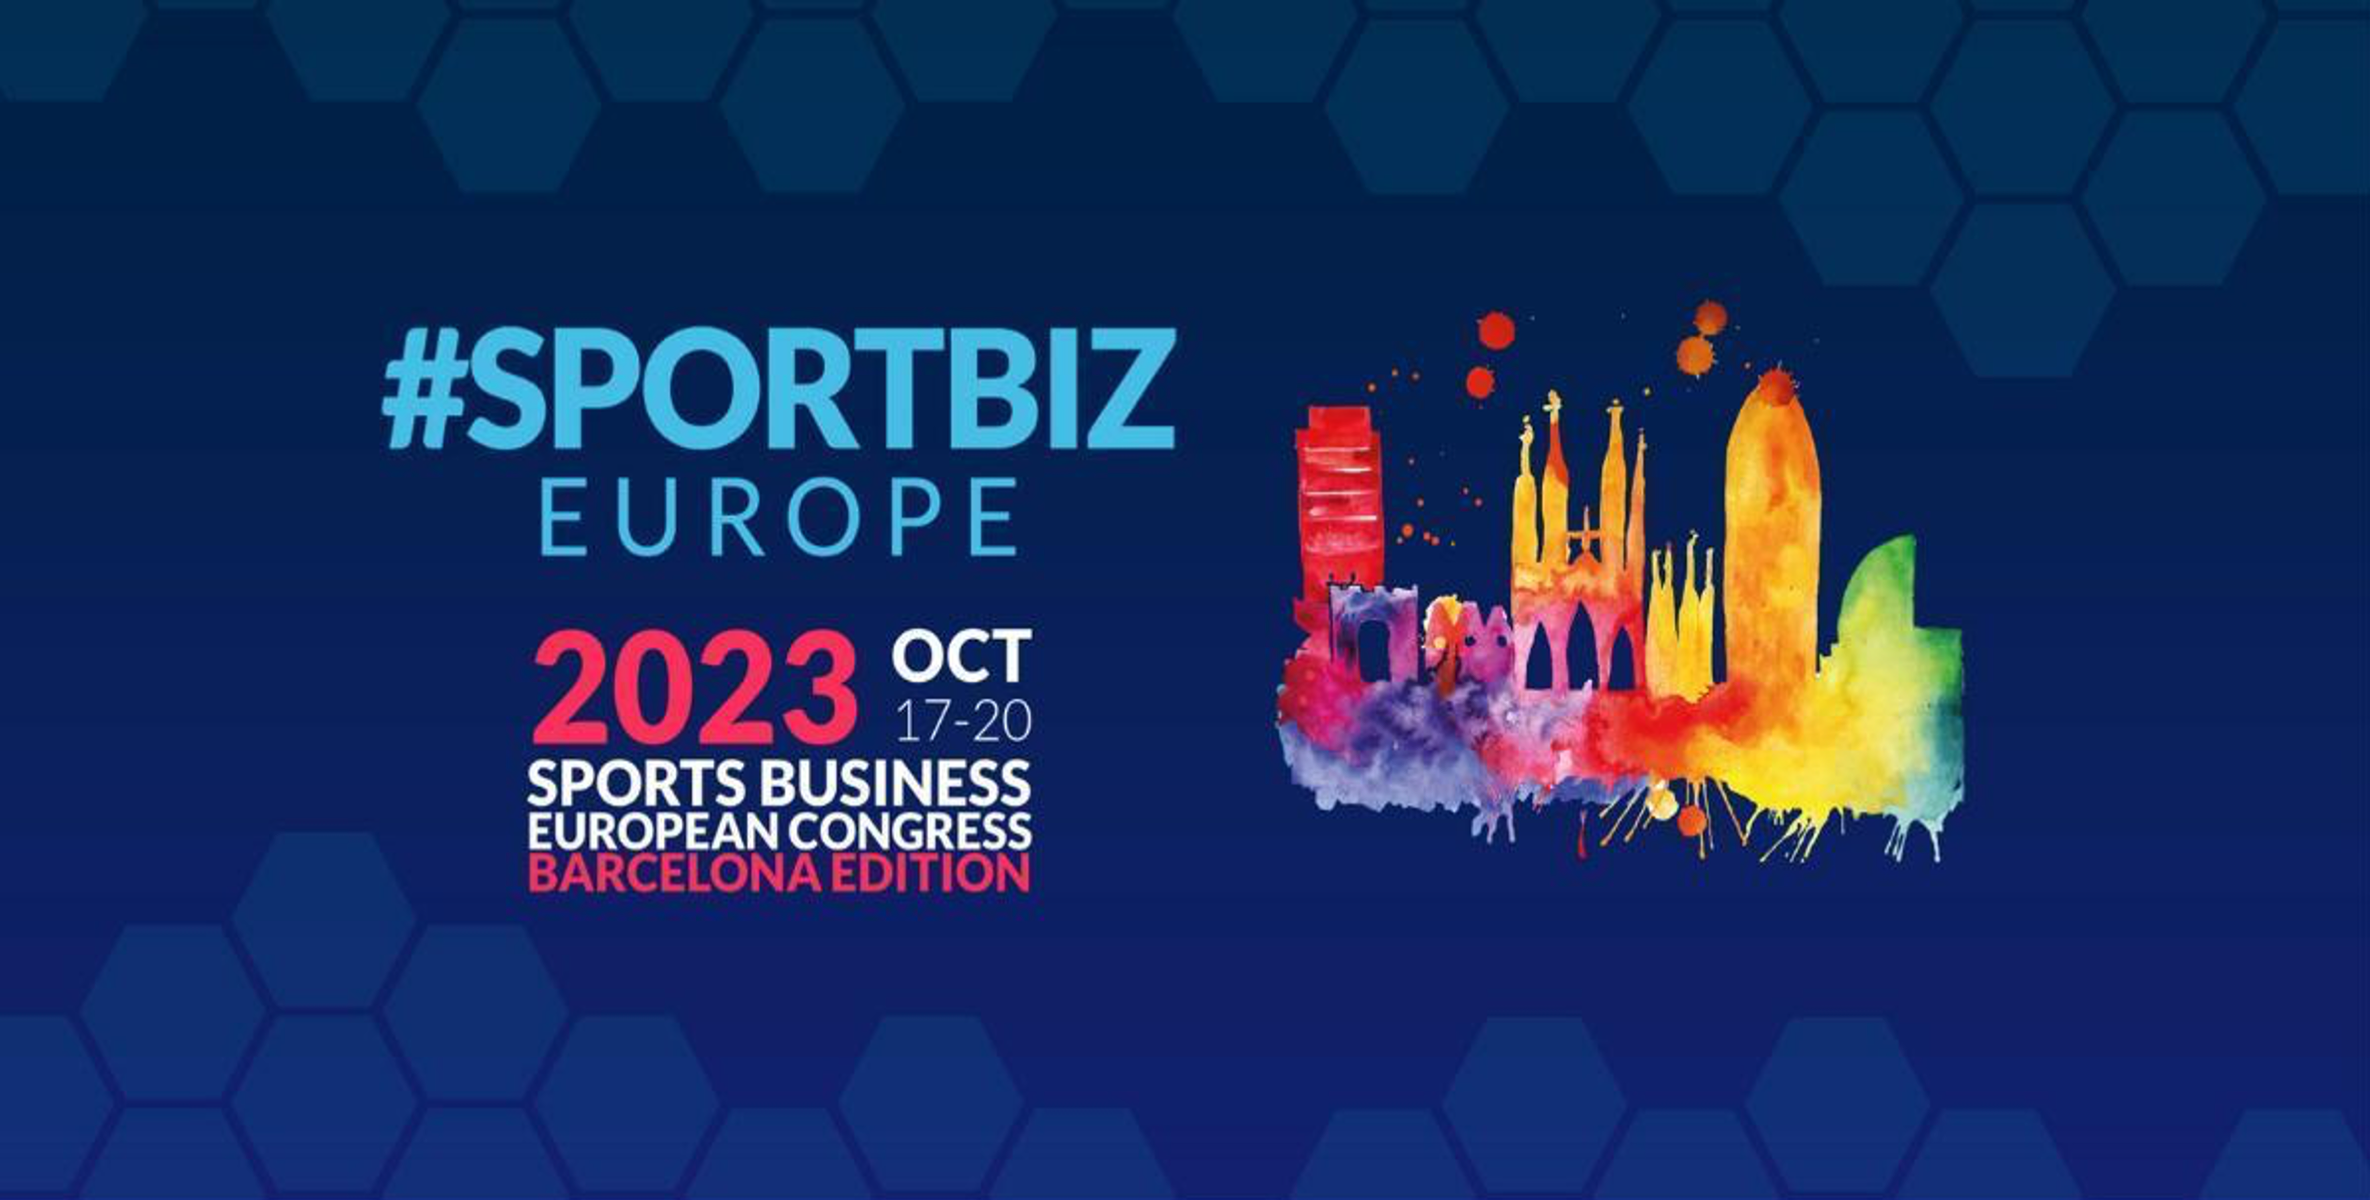 Sportbiz Europe 2023